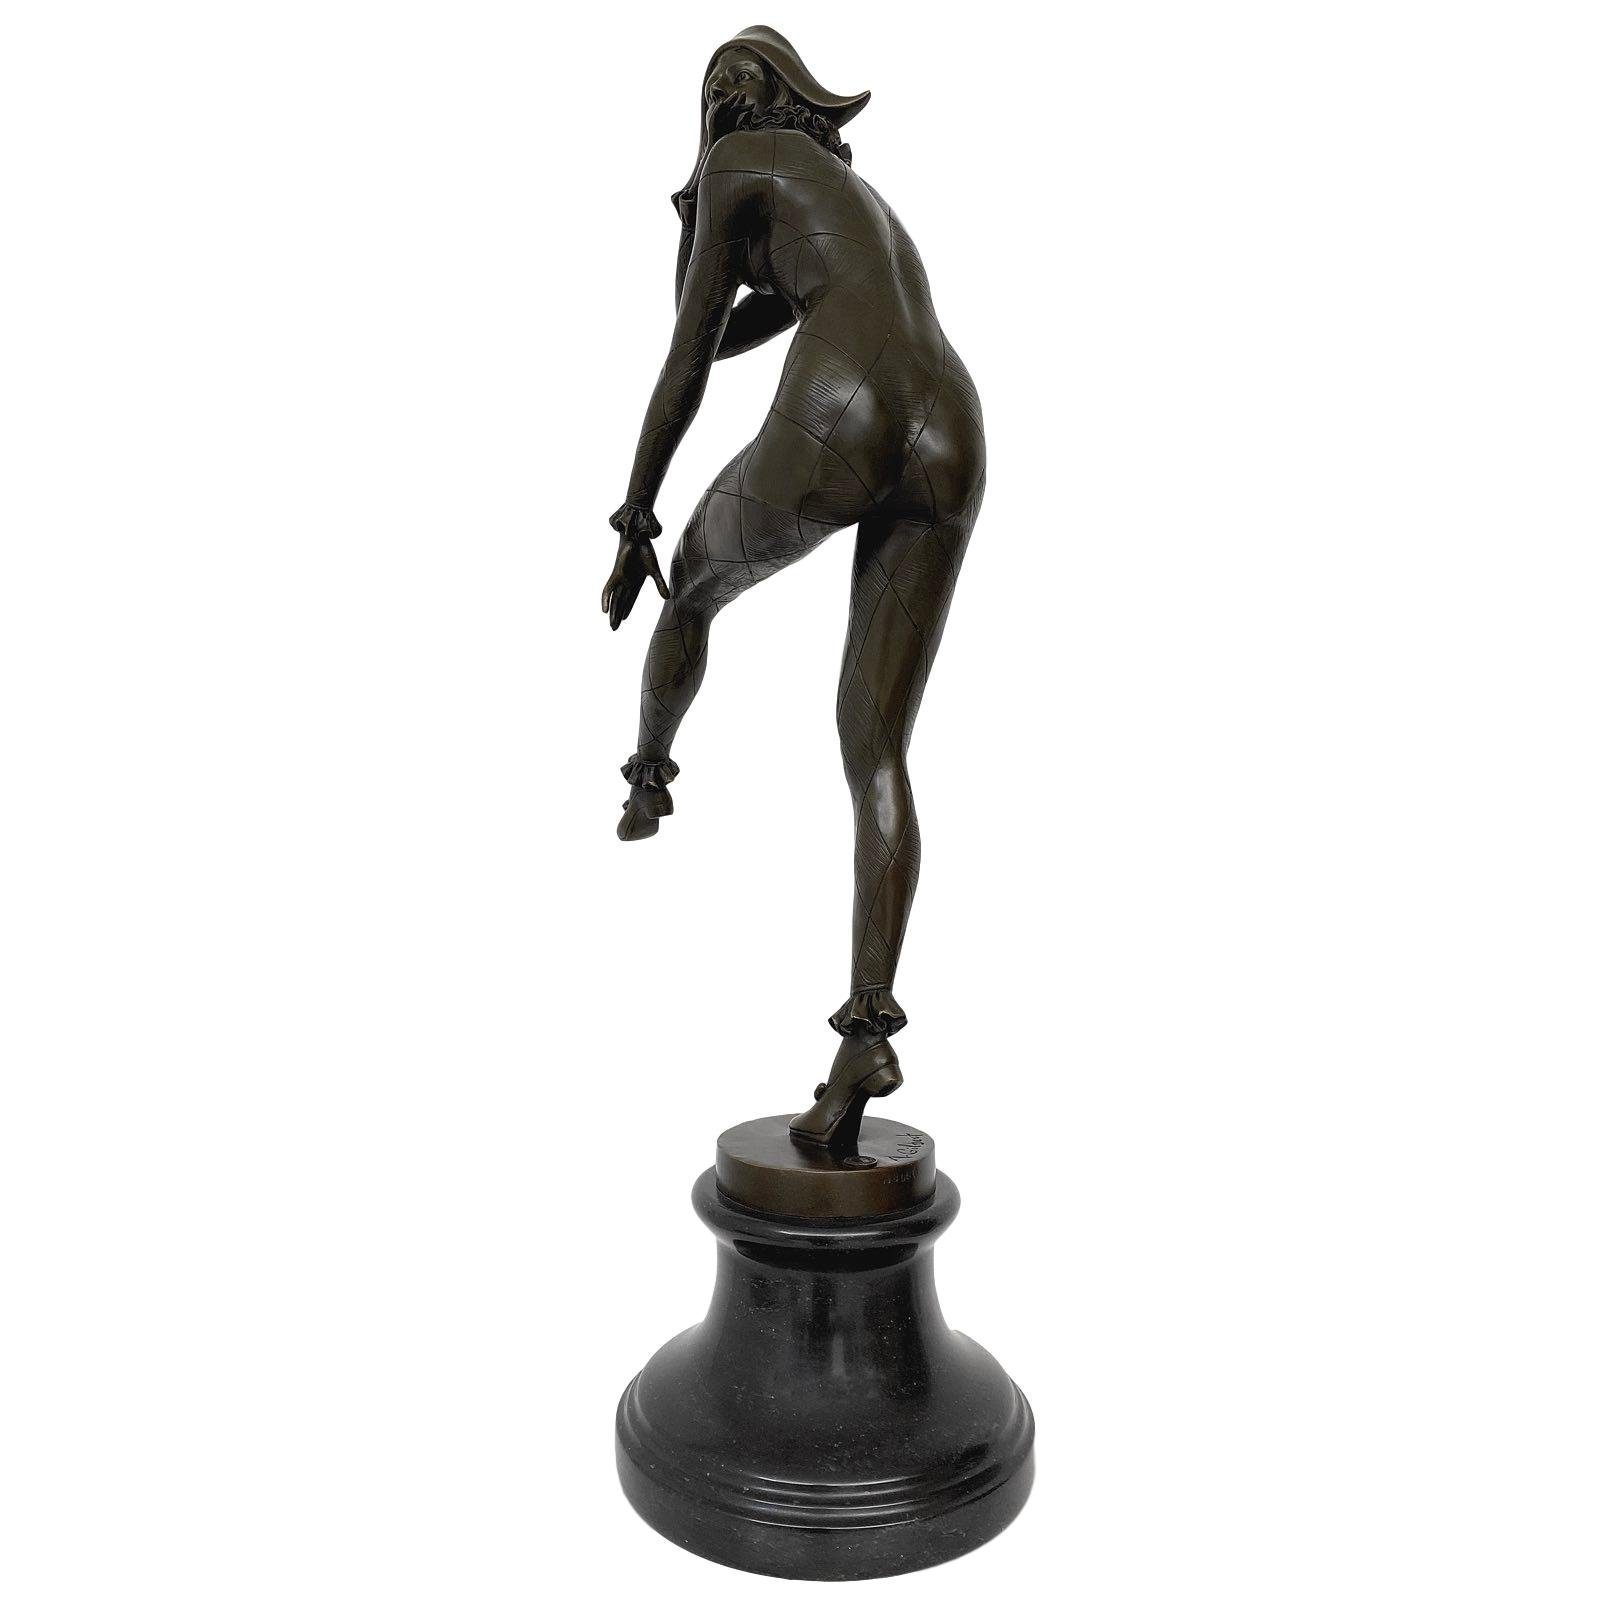 Aubaho Skulptur Bronzeskulptur Harlekin Frau Bronze 72cm Rep Gilbert nach Figur Alfred